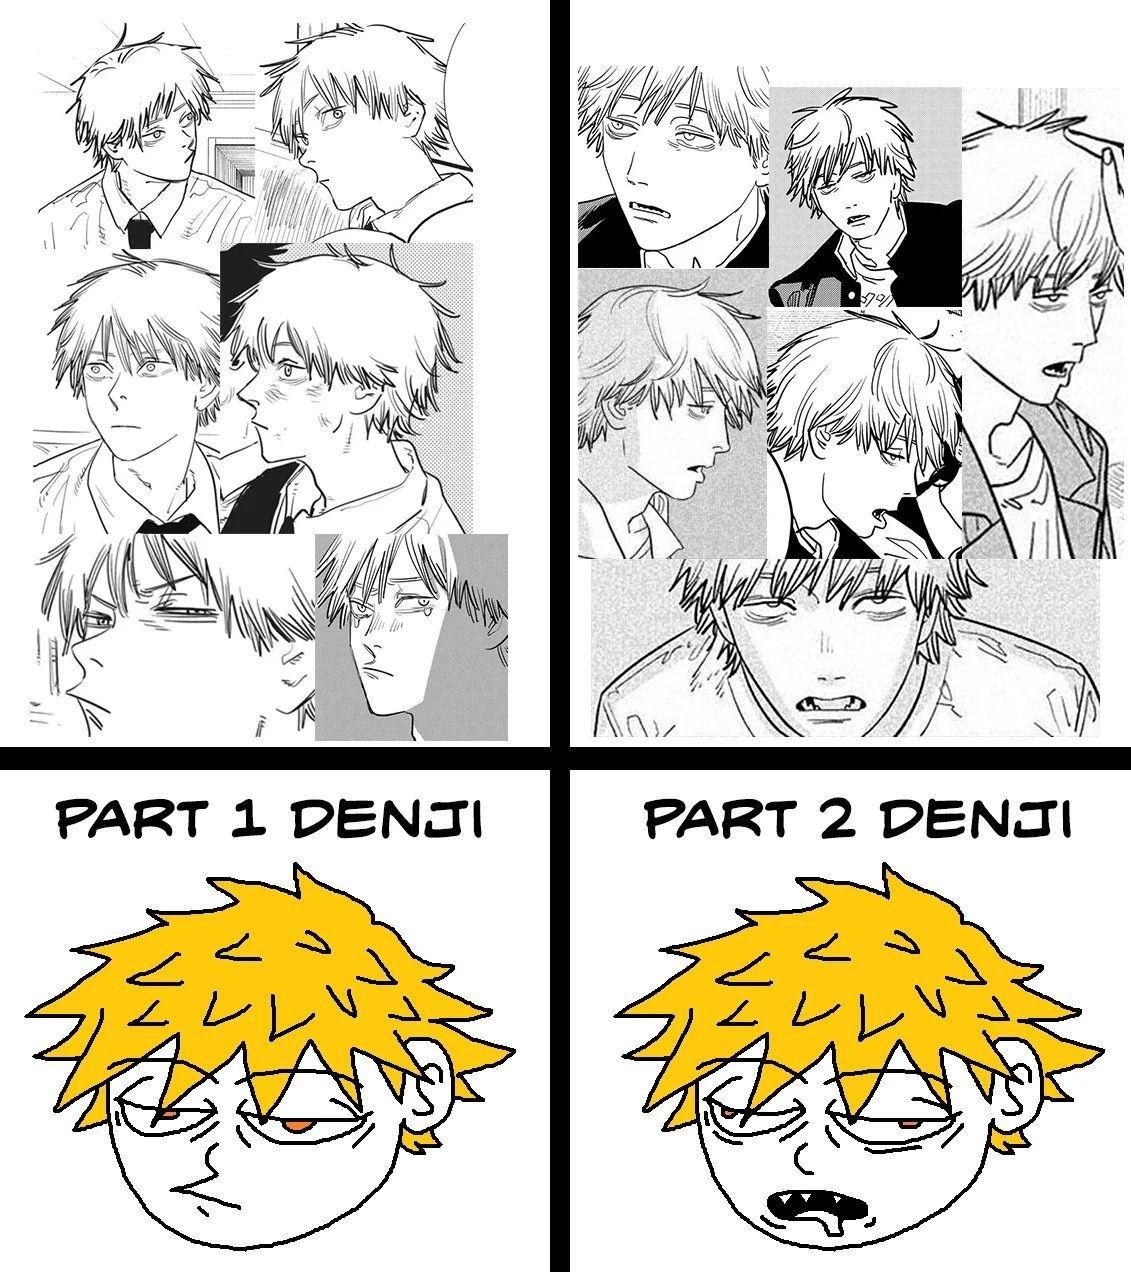 Which Denji do you prefer the most